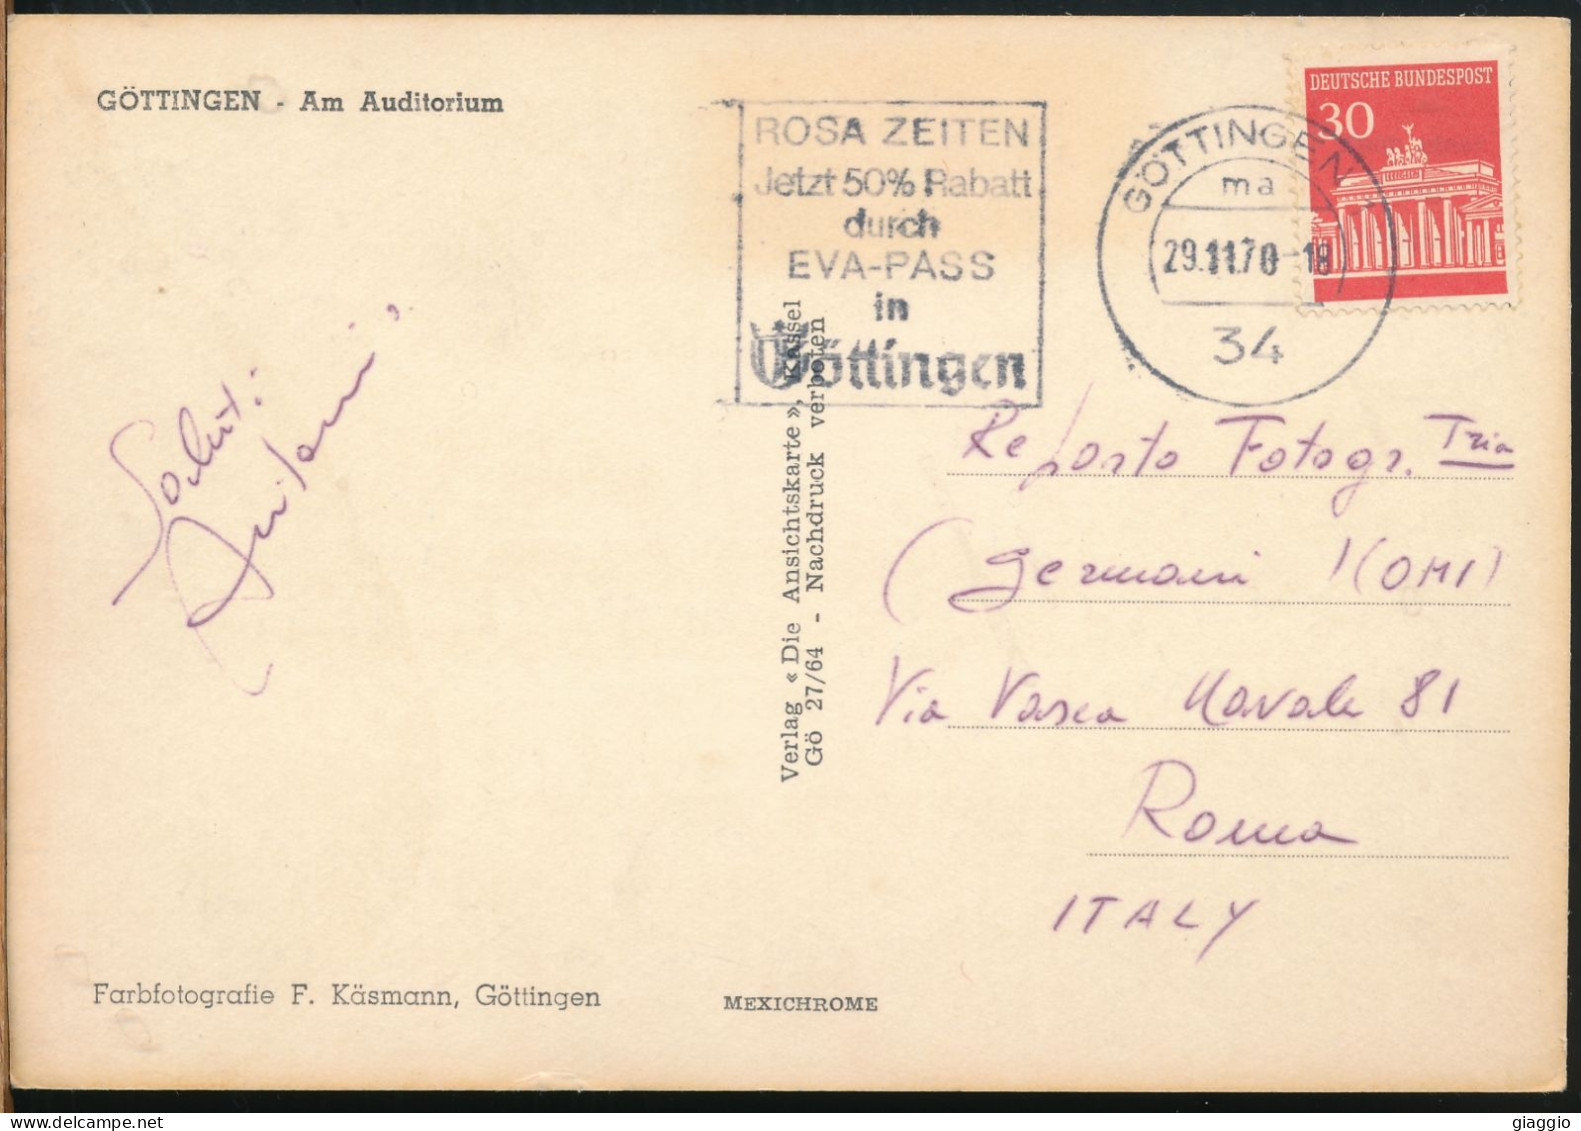 °°° 31049 - GERMANY - GOTTINGEN - AM AUDITORIUM - 1970 With Stamps °°° - Goettingen